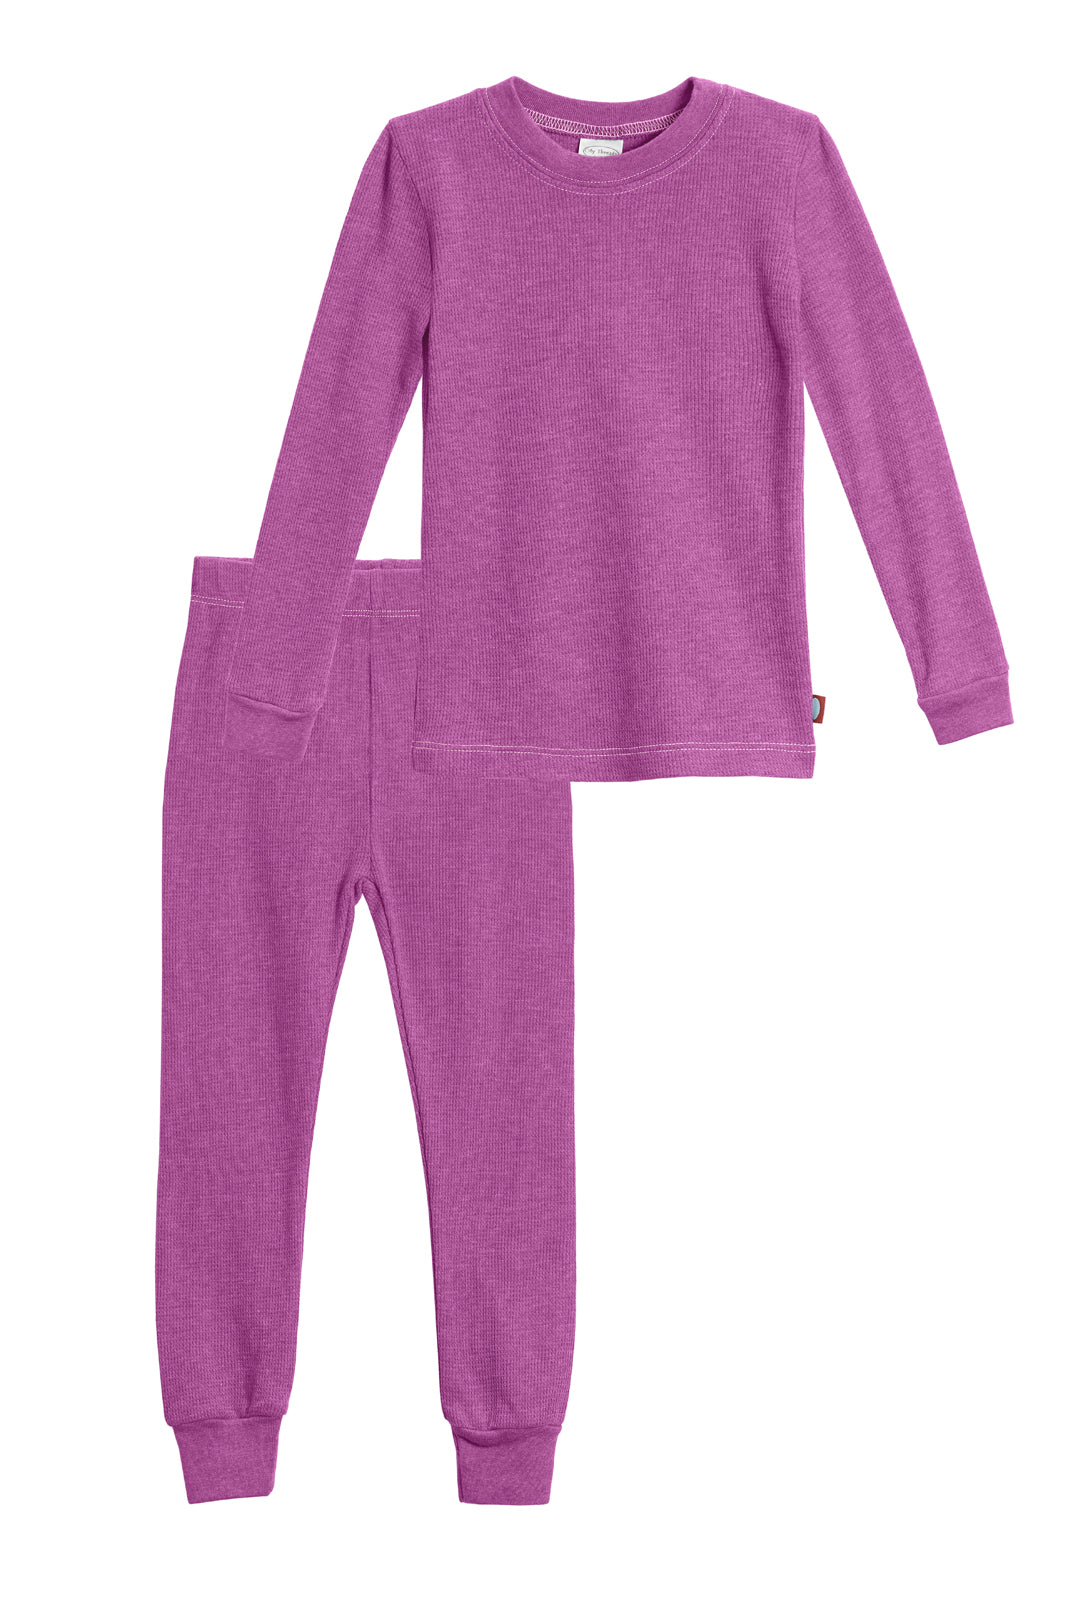 City Threads Girls Size 8 Purple Thermal Long Underwear Long Johns NWOT